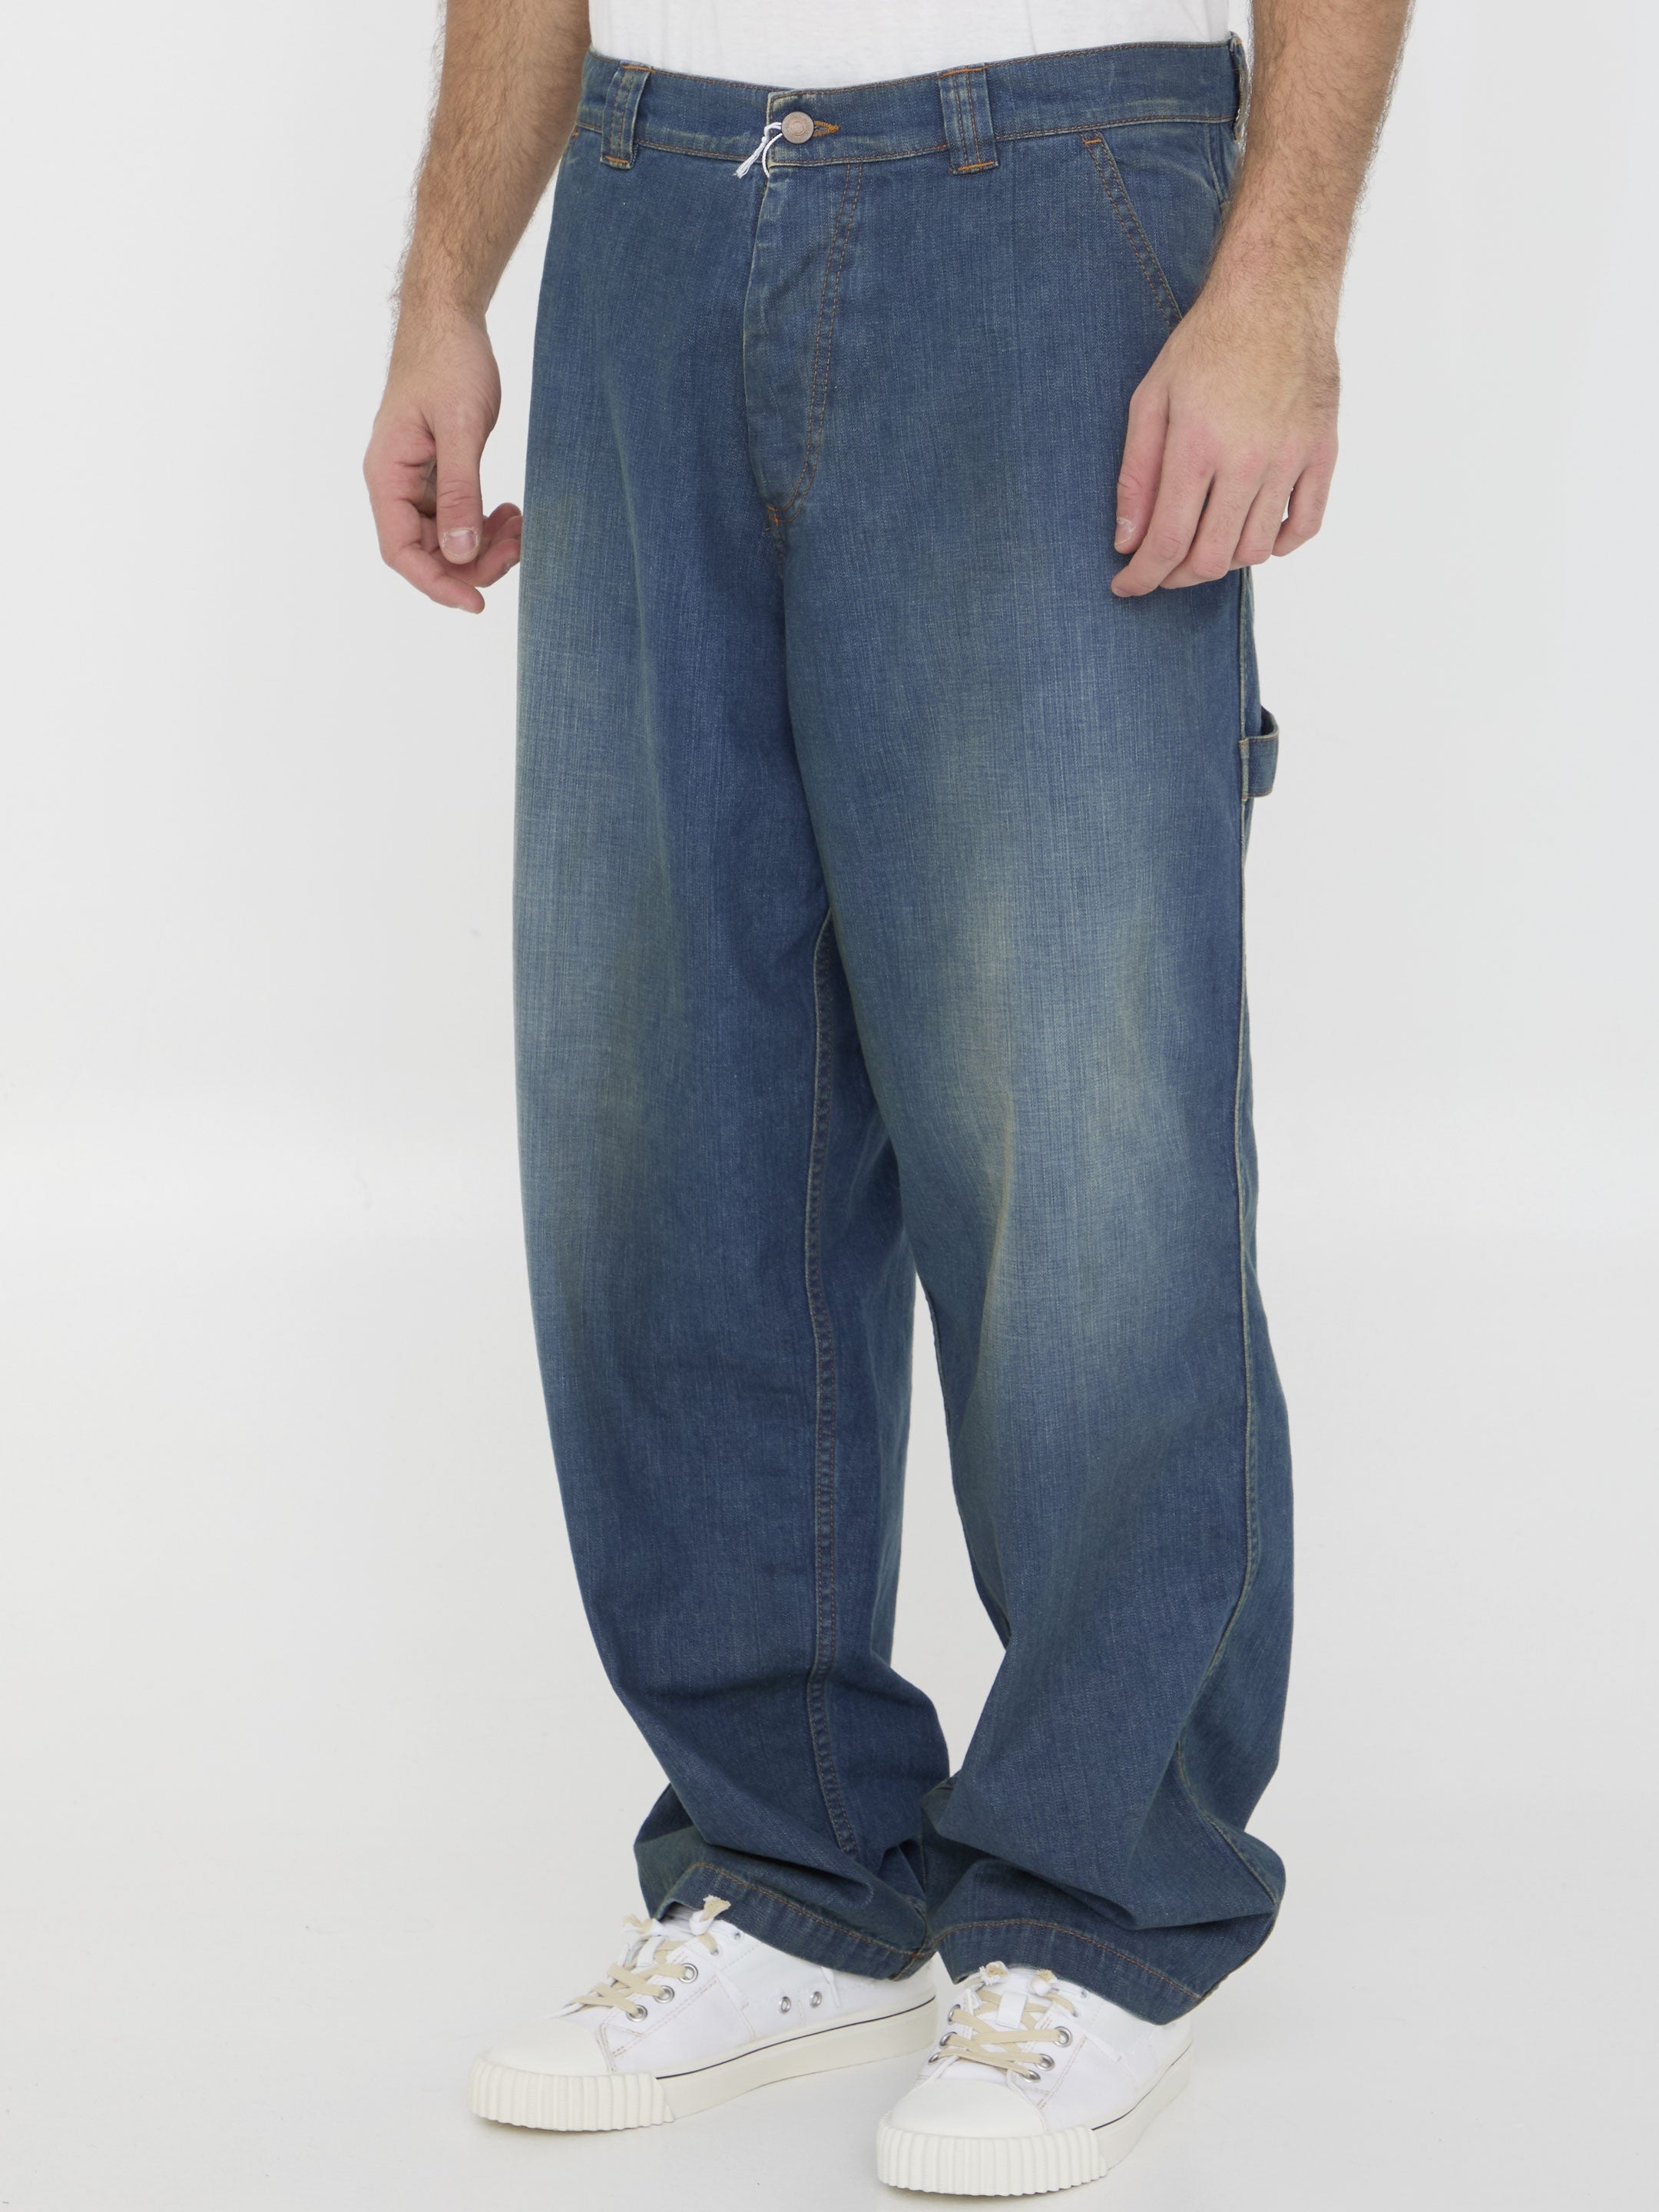 MAISON-MARGIELA-OUTLET-SALE-Americana-wash-jeans-Jeans-ARCHIVE-COLLECTION-2.jpg